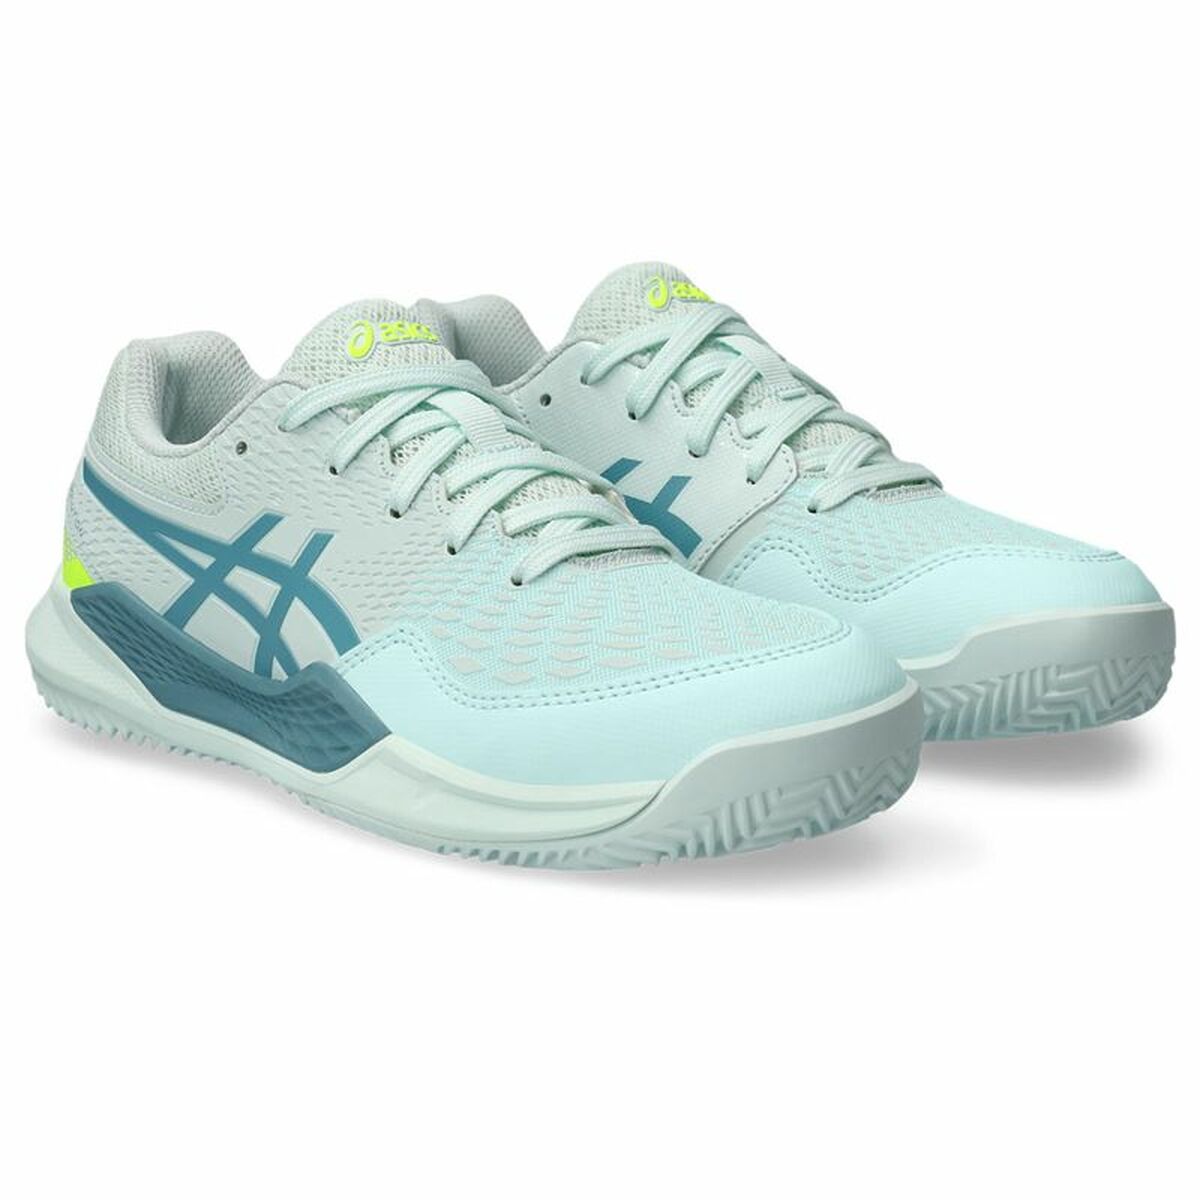 Chaussures de Tennis pour Femmes Asics Gel-Resolution 9 Aigue marine